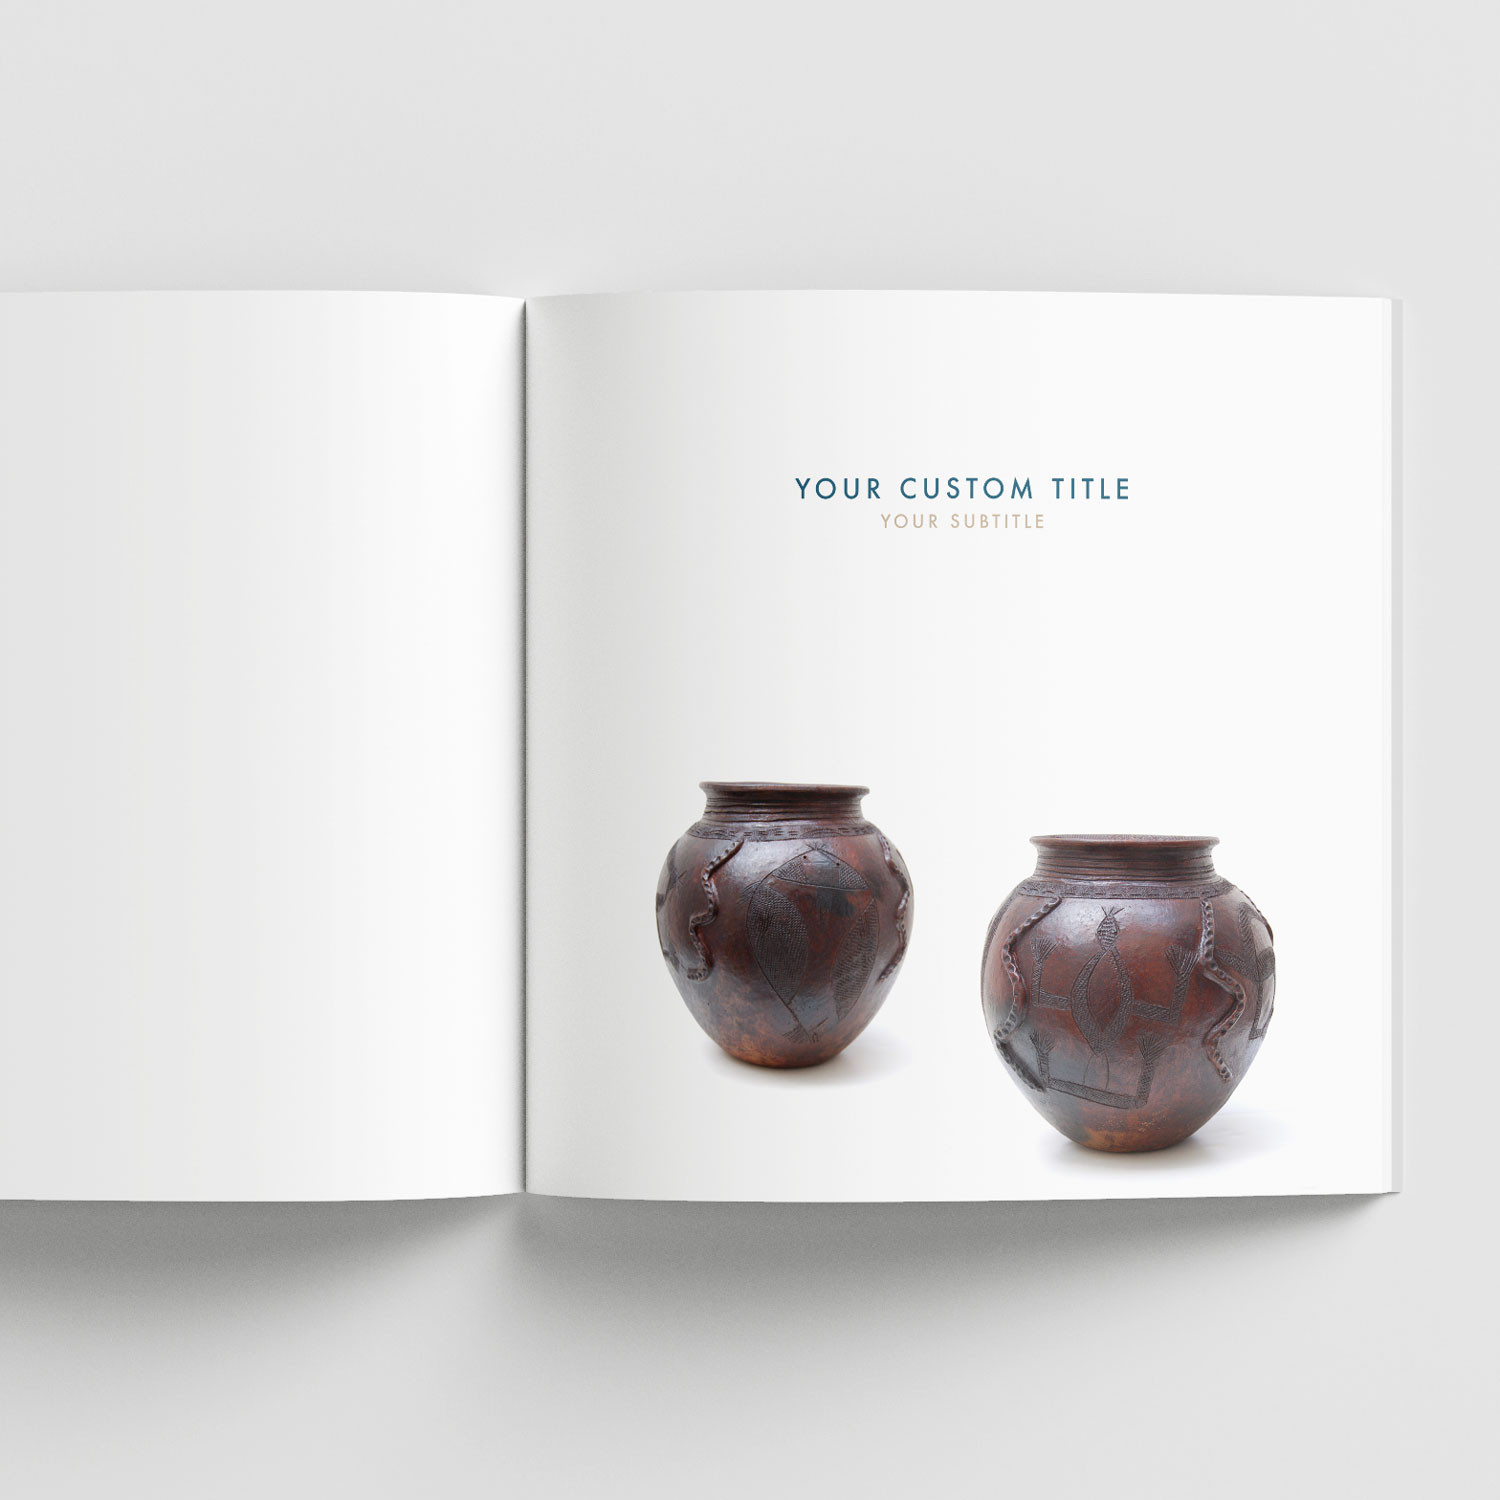 Pottery Journal – personalized pottery log